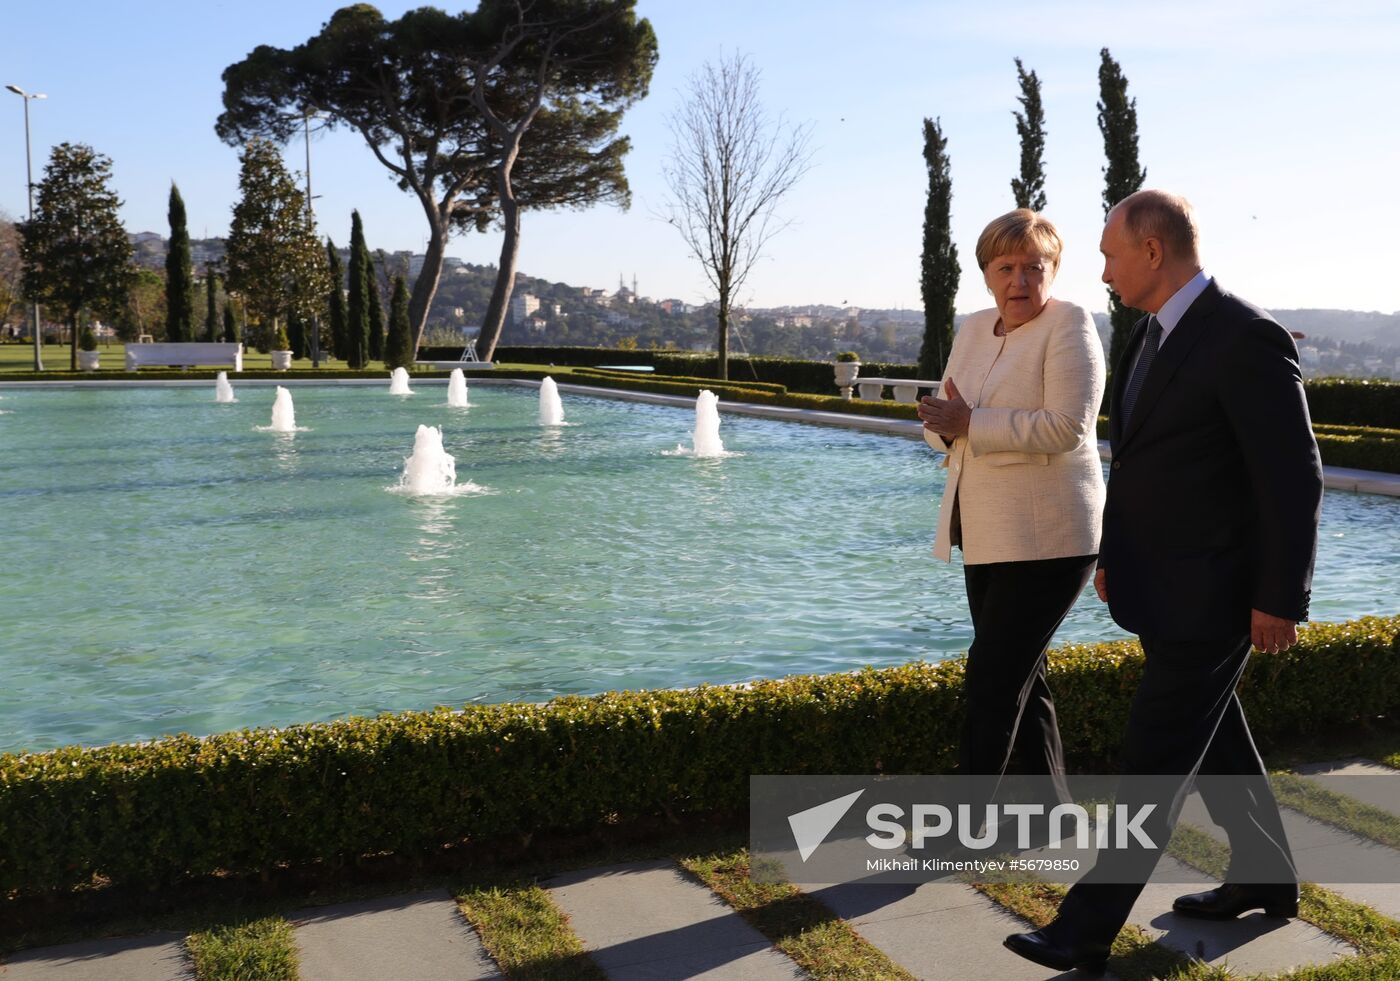 President Putin's visit to Turkey